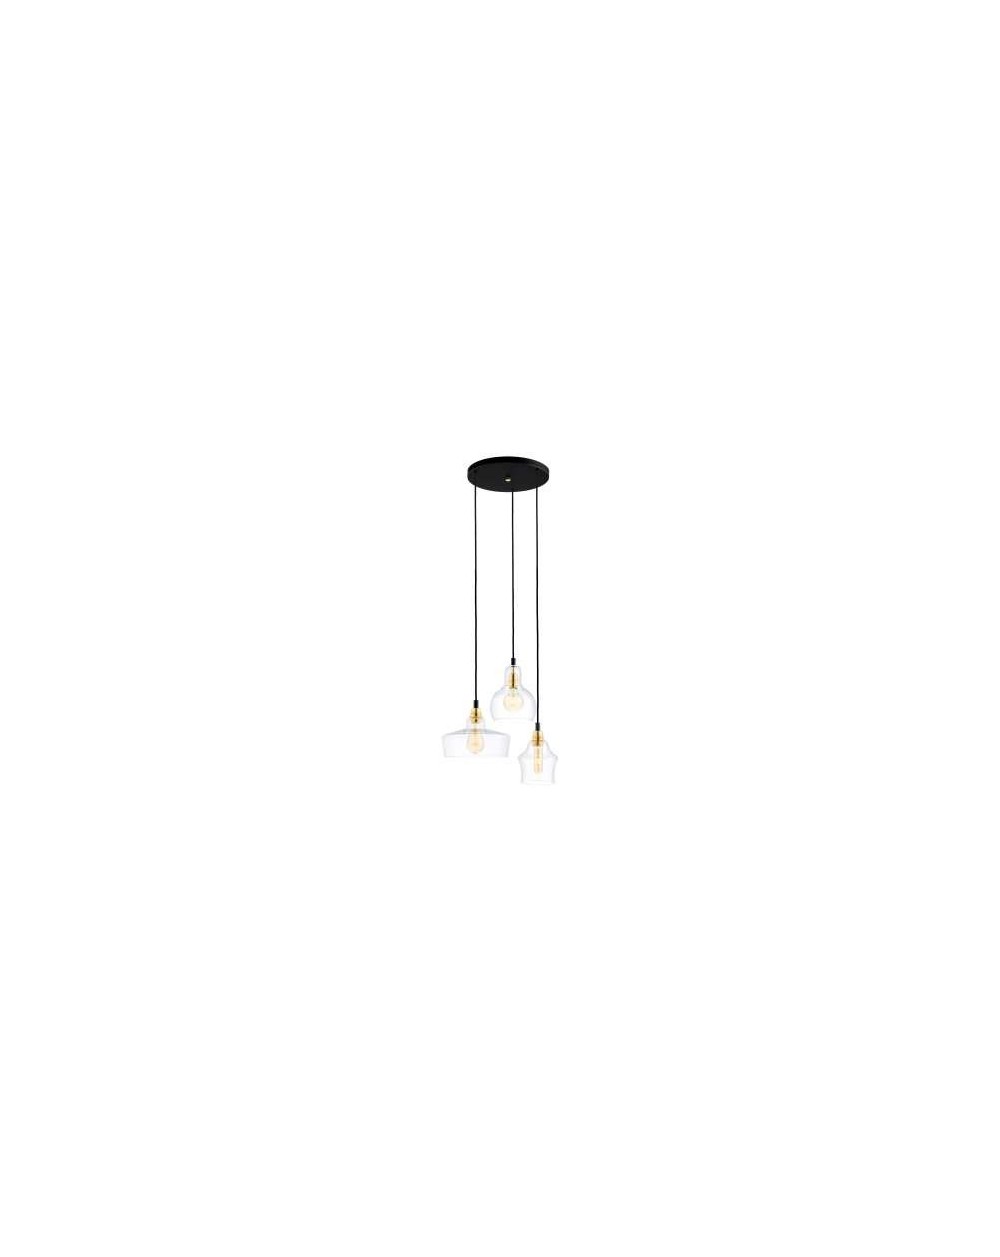 Longis Plafon 3 Gold lampa wisząca szklana - Kaspa